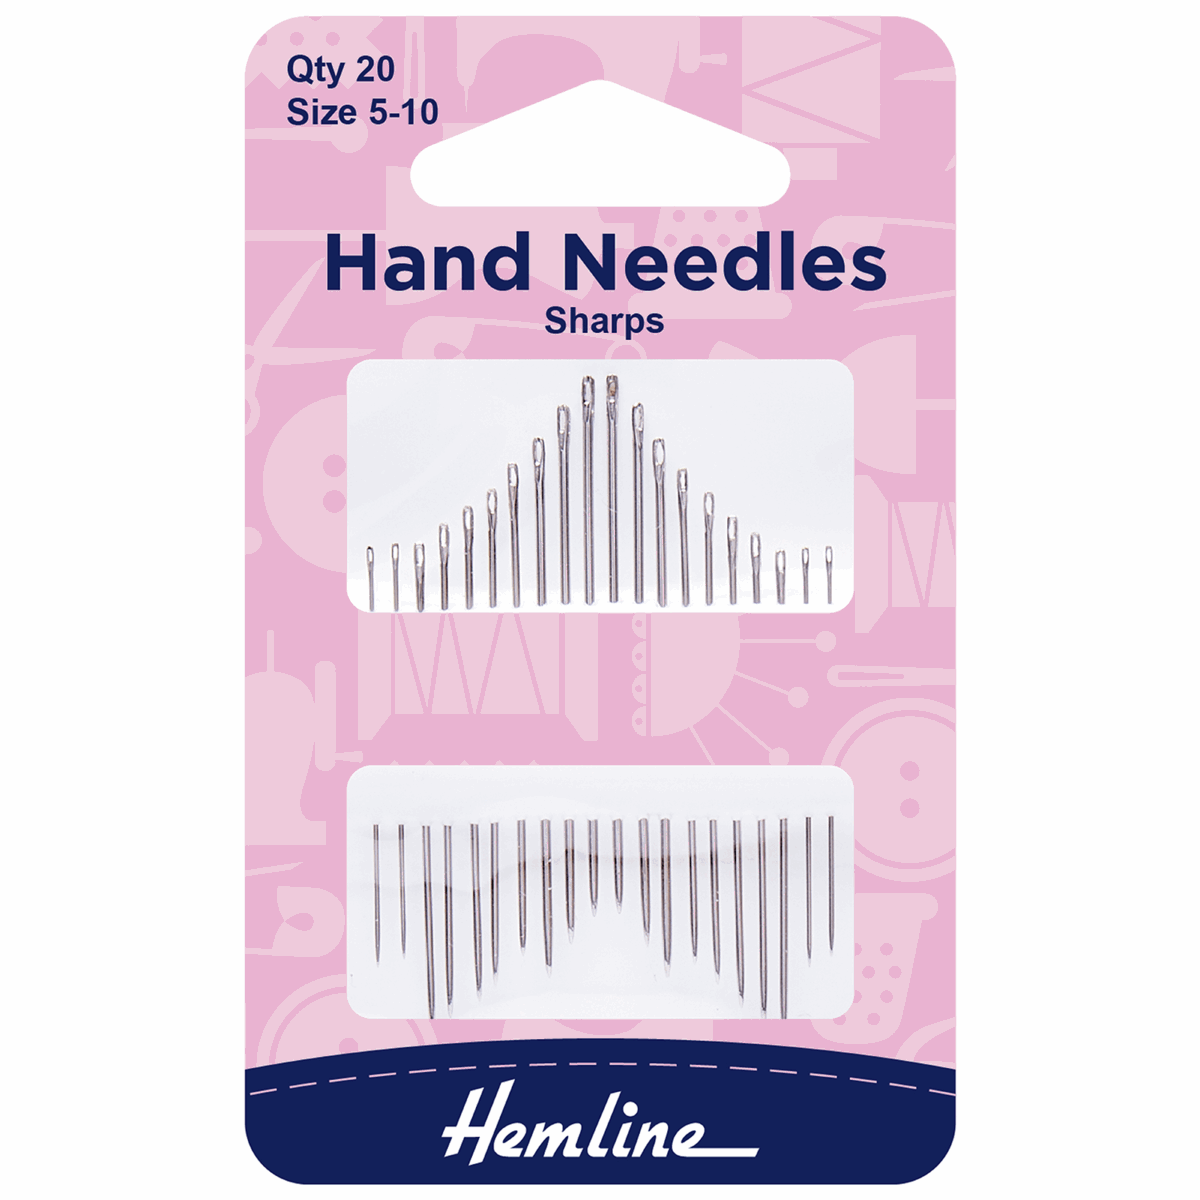 Hemline Hand Sewing Needles: Sharps: Size 5-10